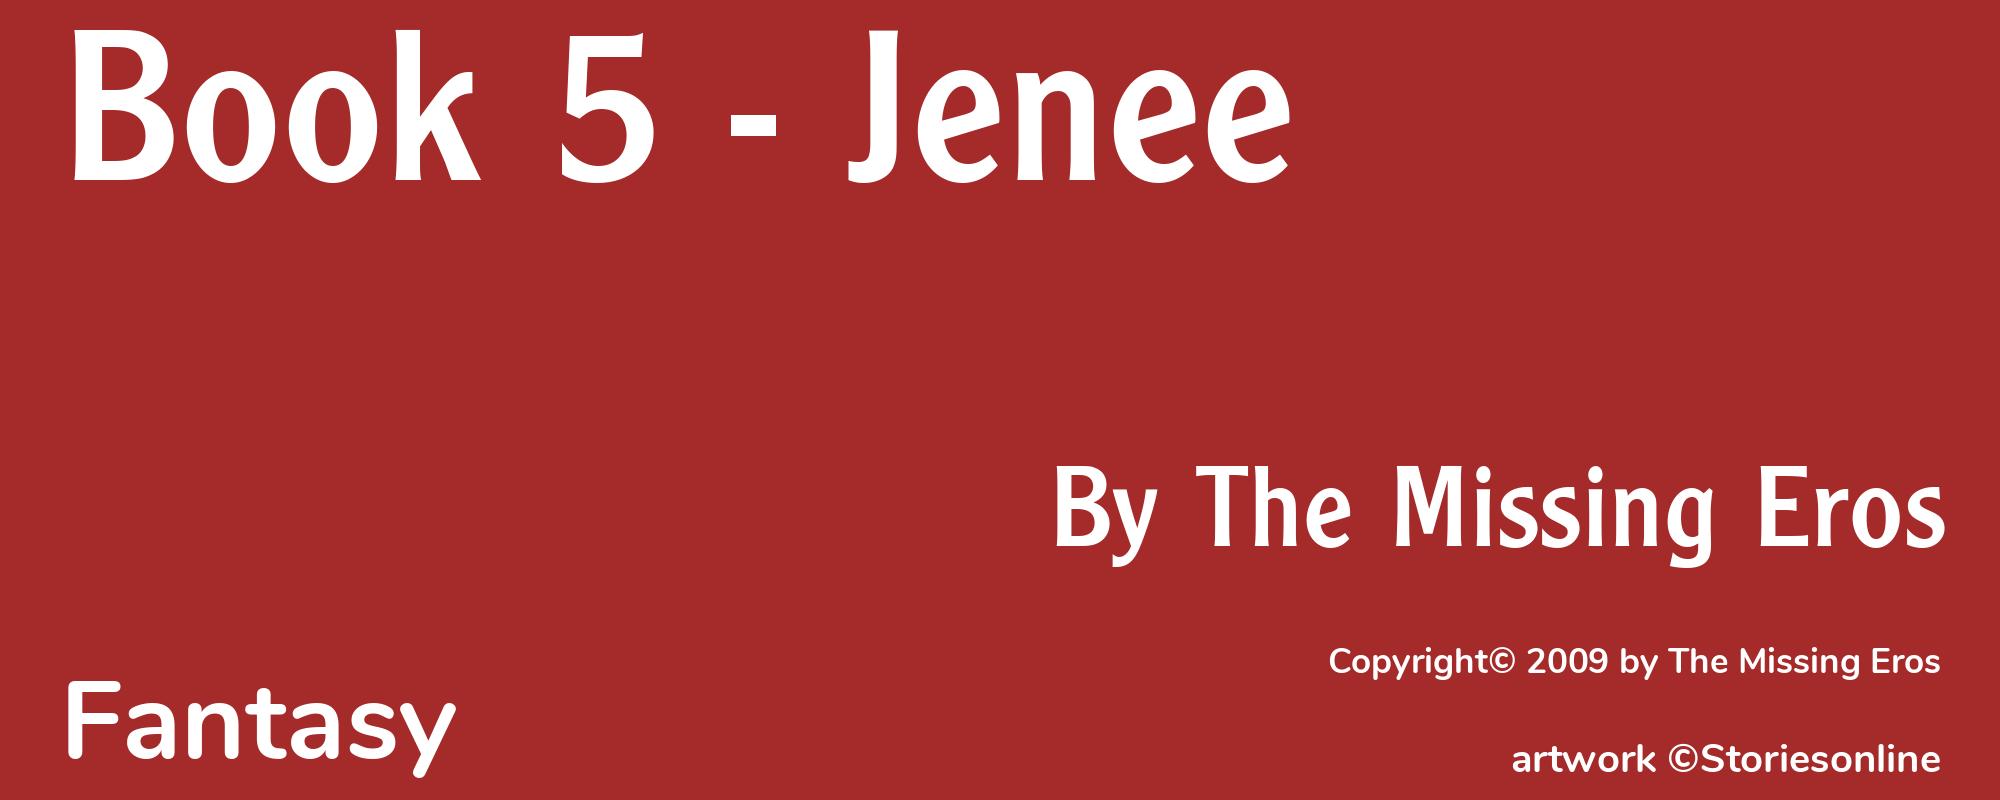 Book 5 - Jenee - Cover